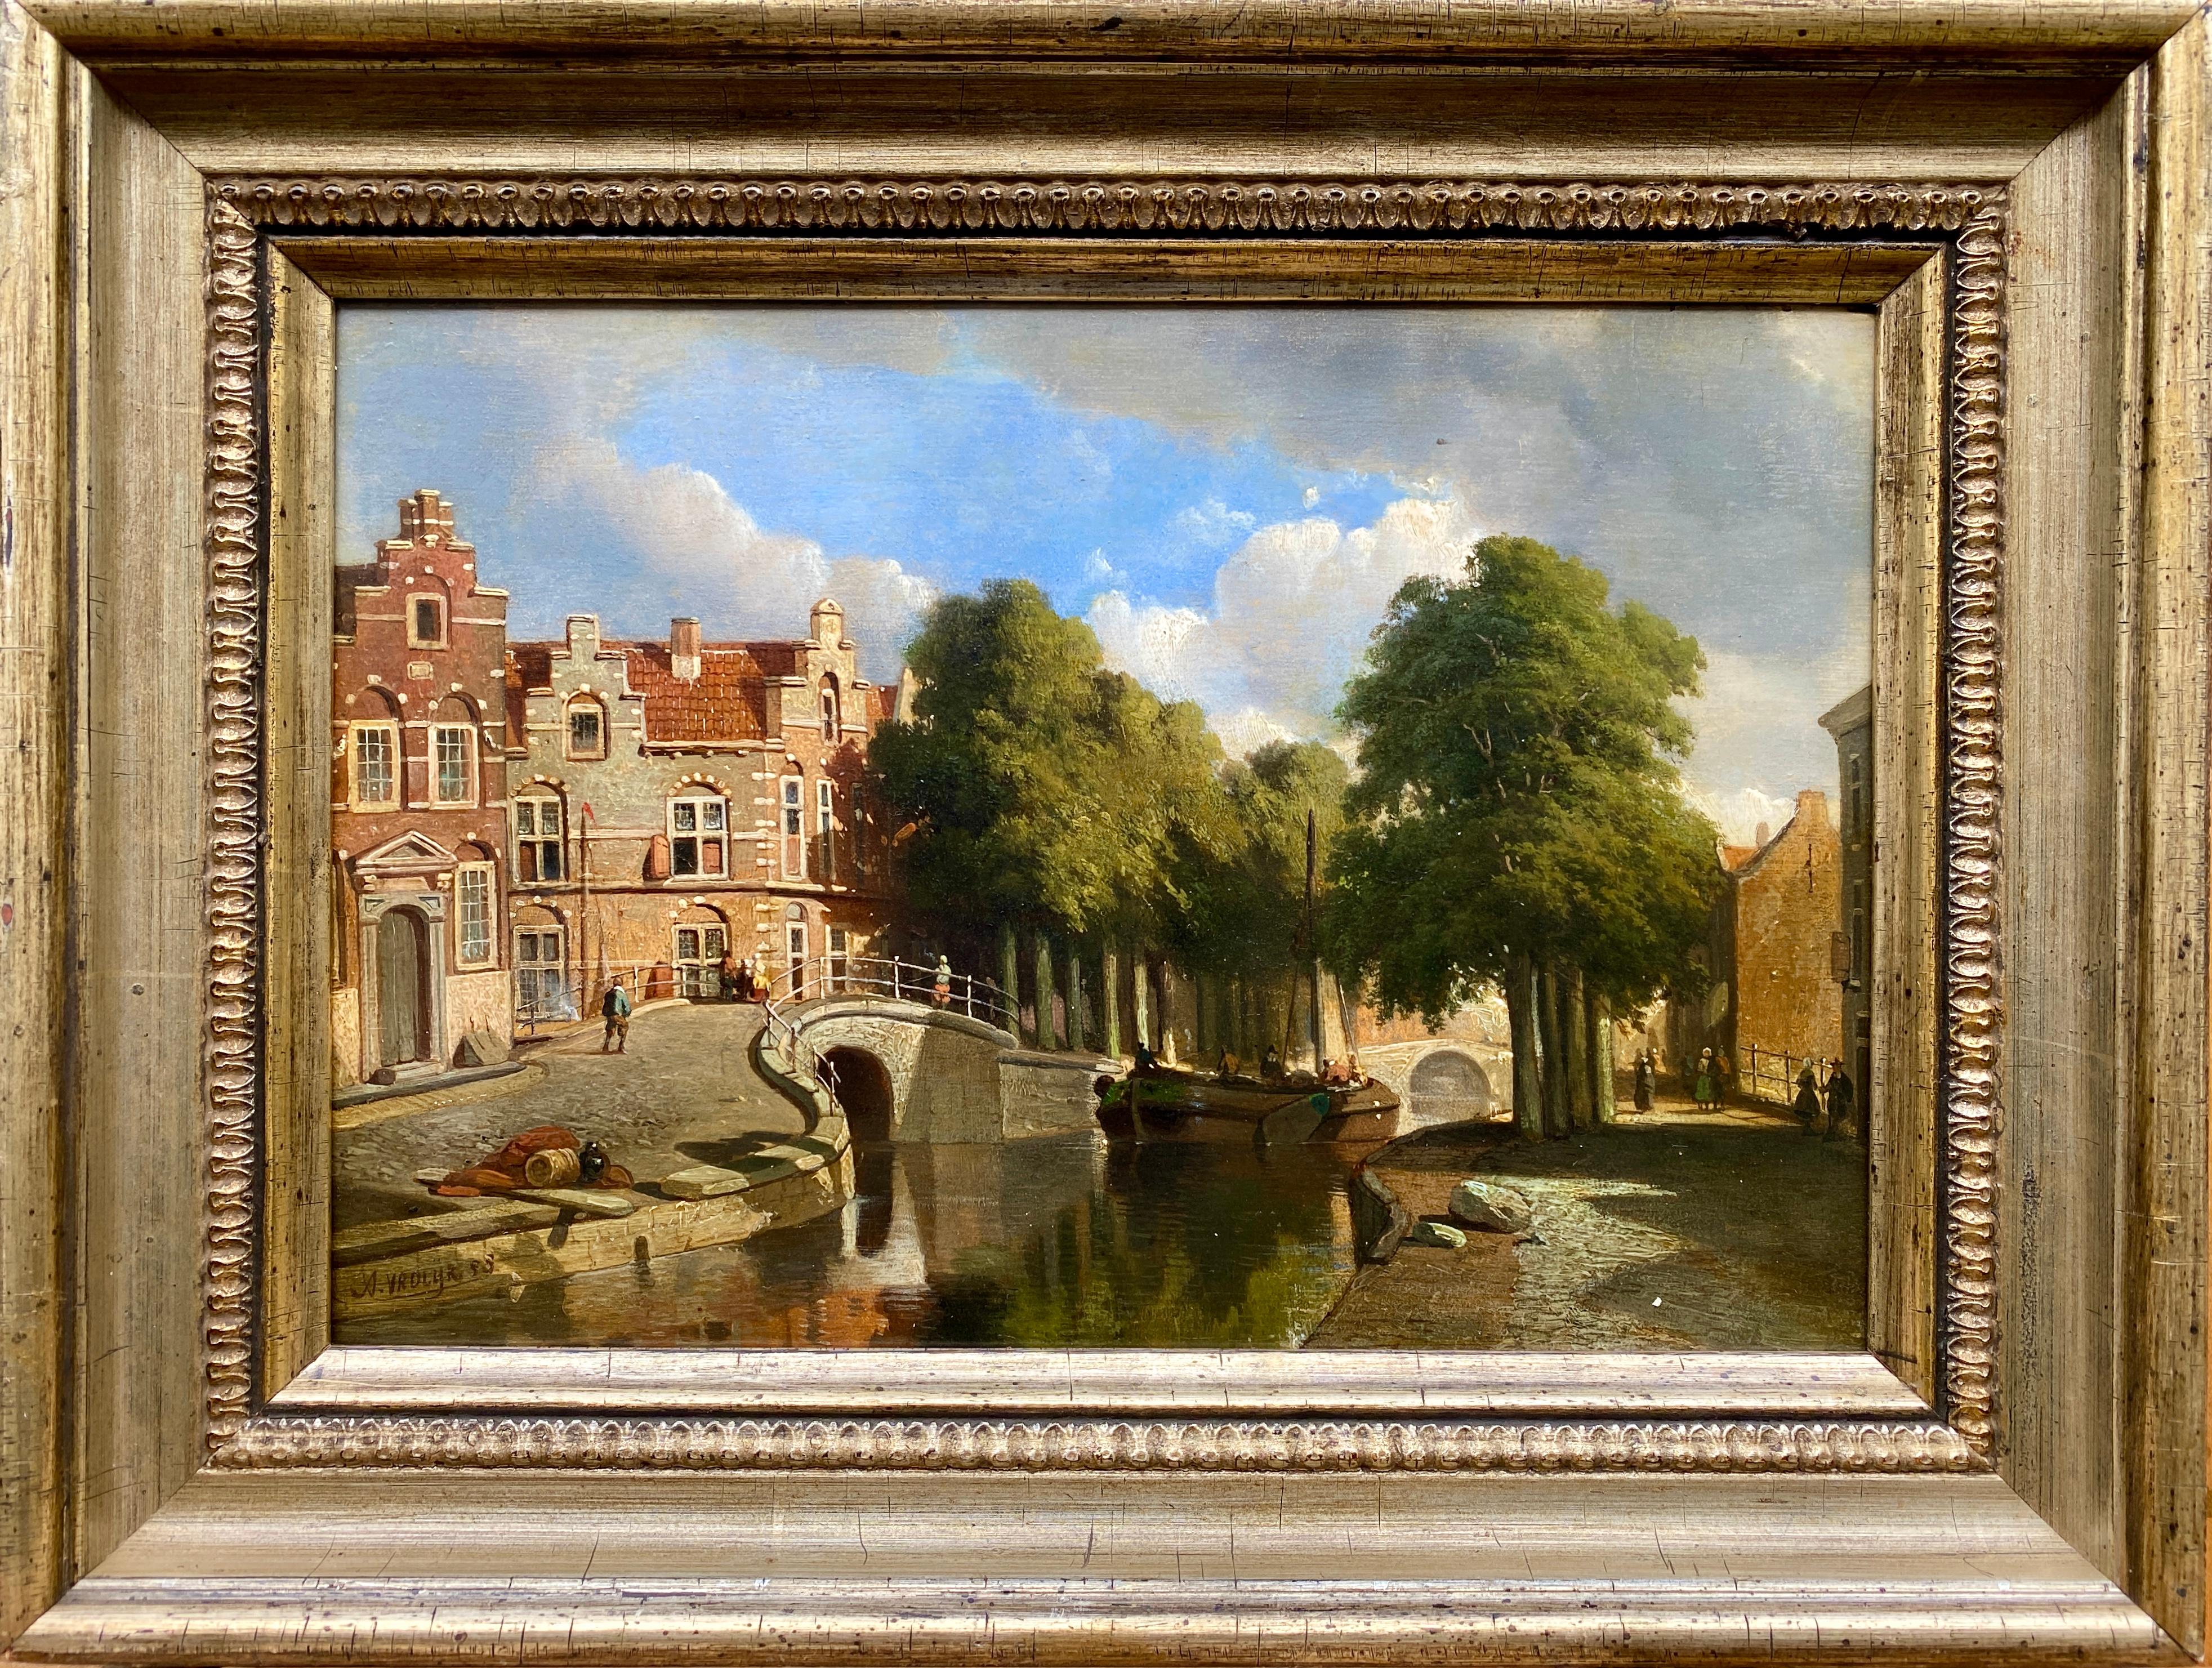 Jacobus Adrianus Vrolijk Landscape Painting – Eine niederländische Stadtansicht, Vrolijk Jacobus Adrianus, Den Haag 1834 - 1862, niederländischer Maler